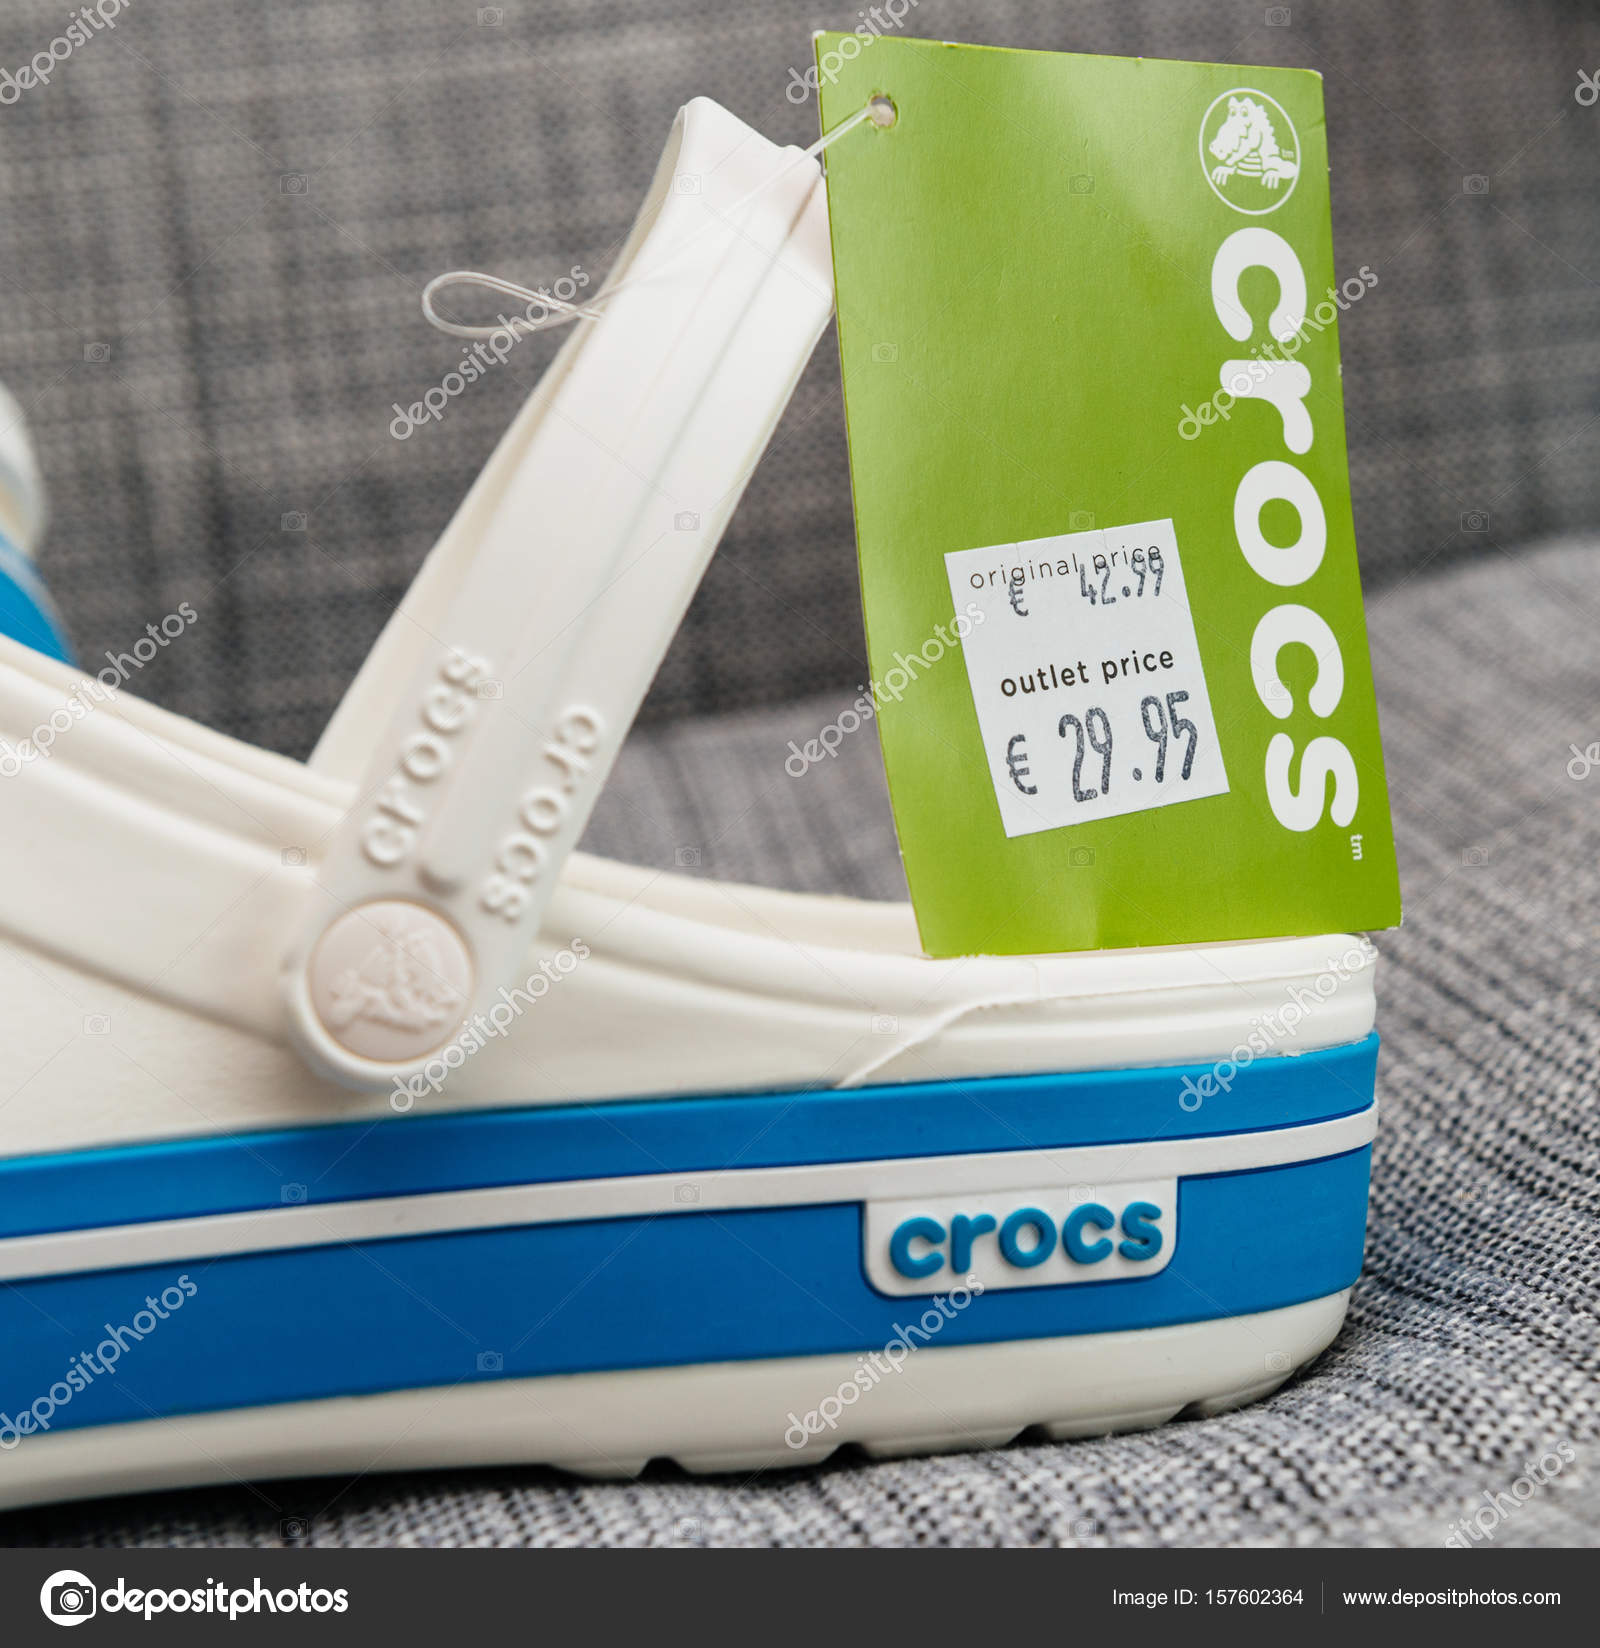 price for crocs